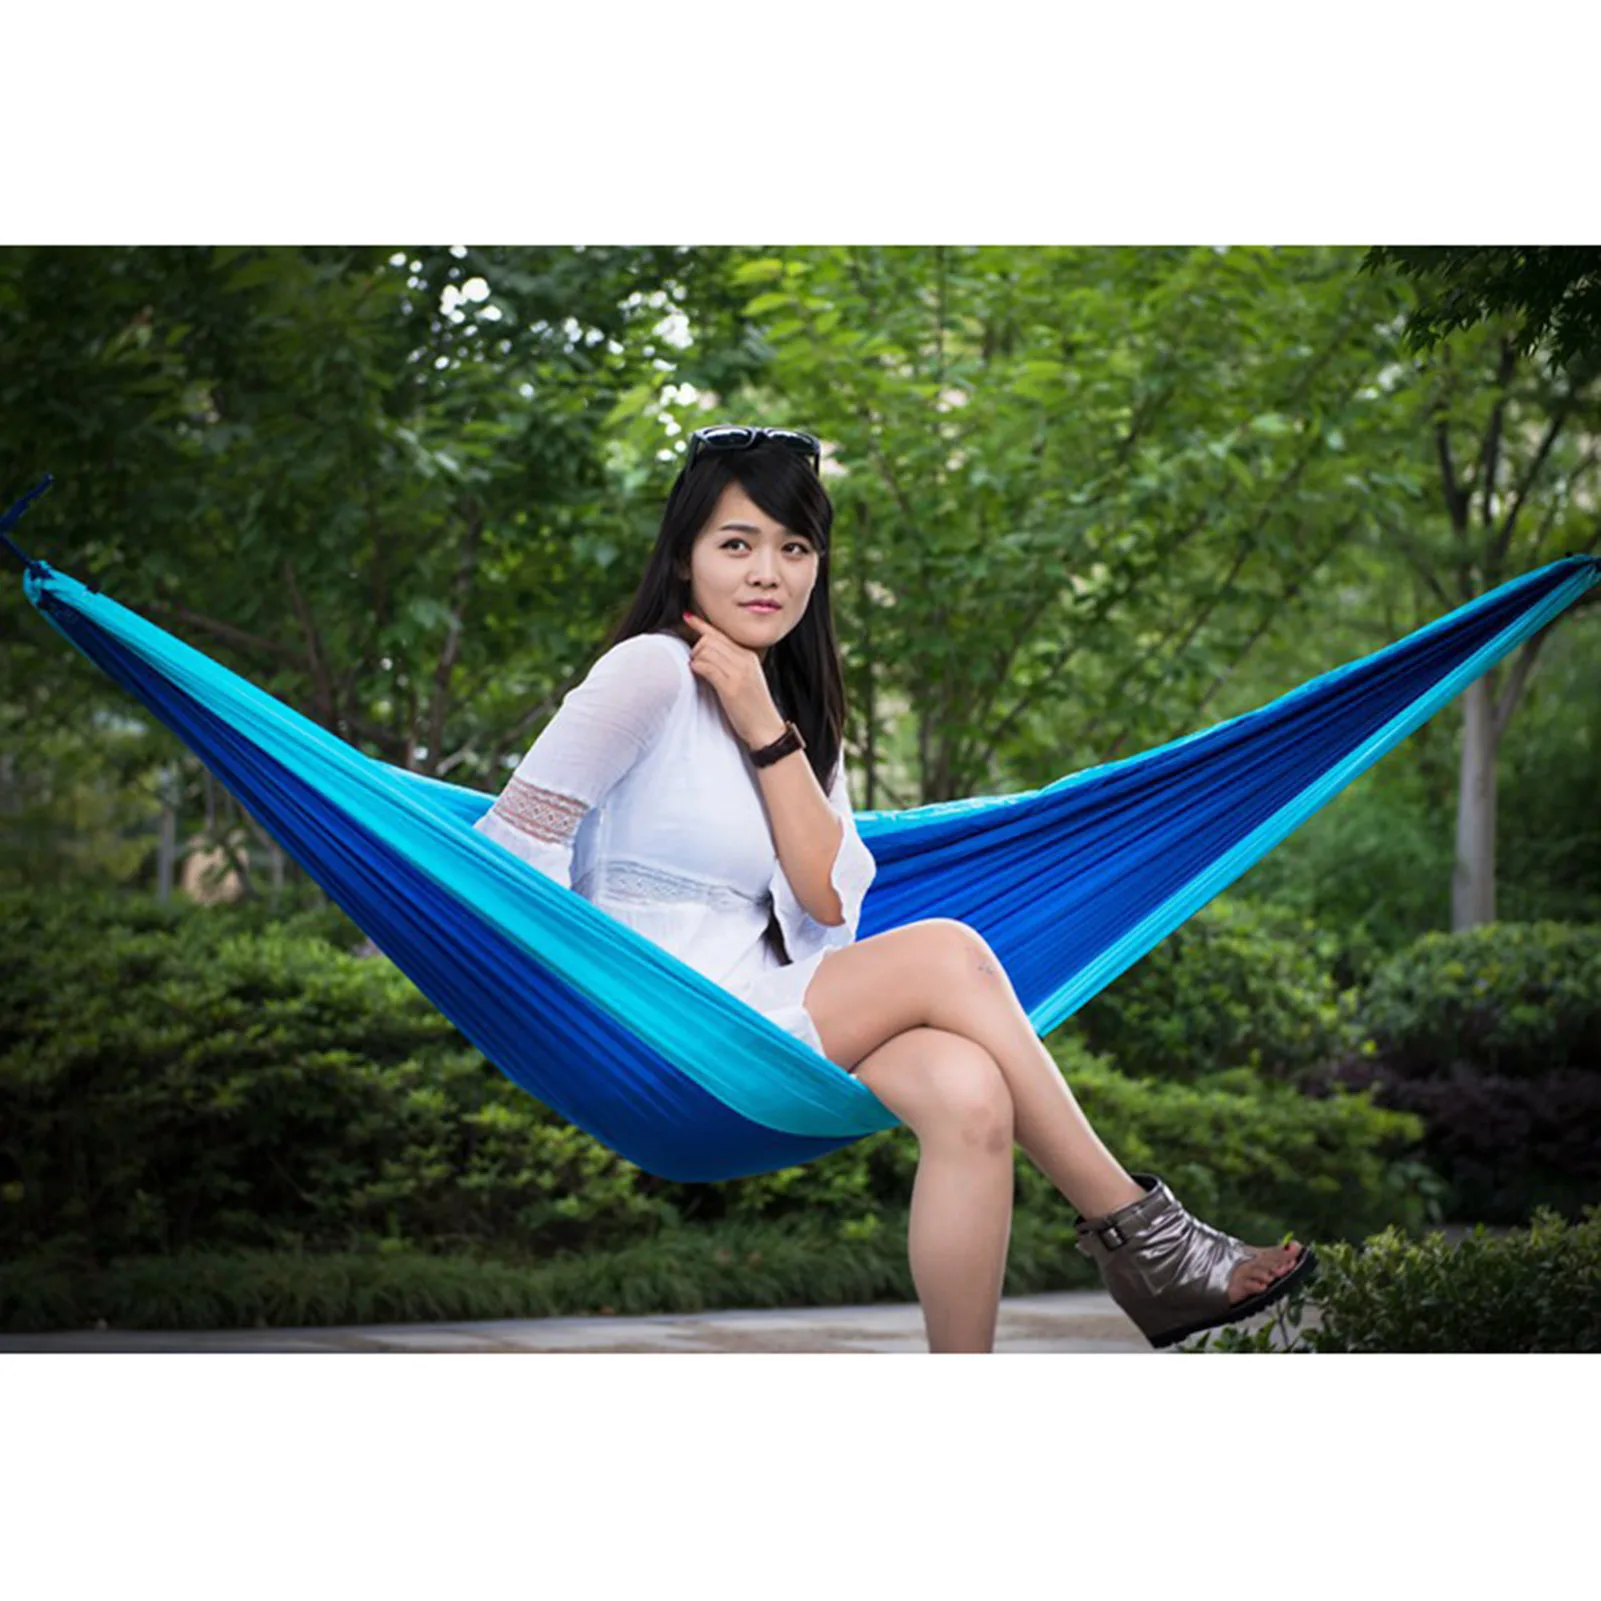 

New Outdoor Camping Hammock Soft Nylon Fabric Safe Sturdy Blue Hammock for Fishing Lawn Garden